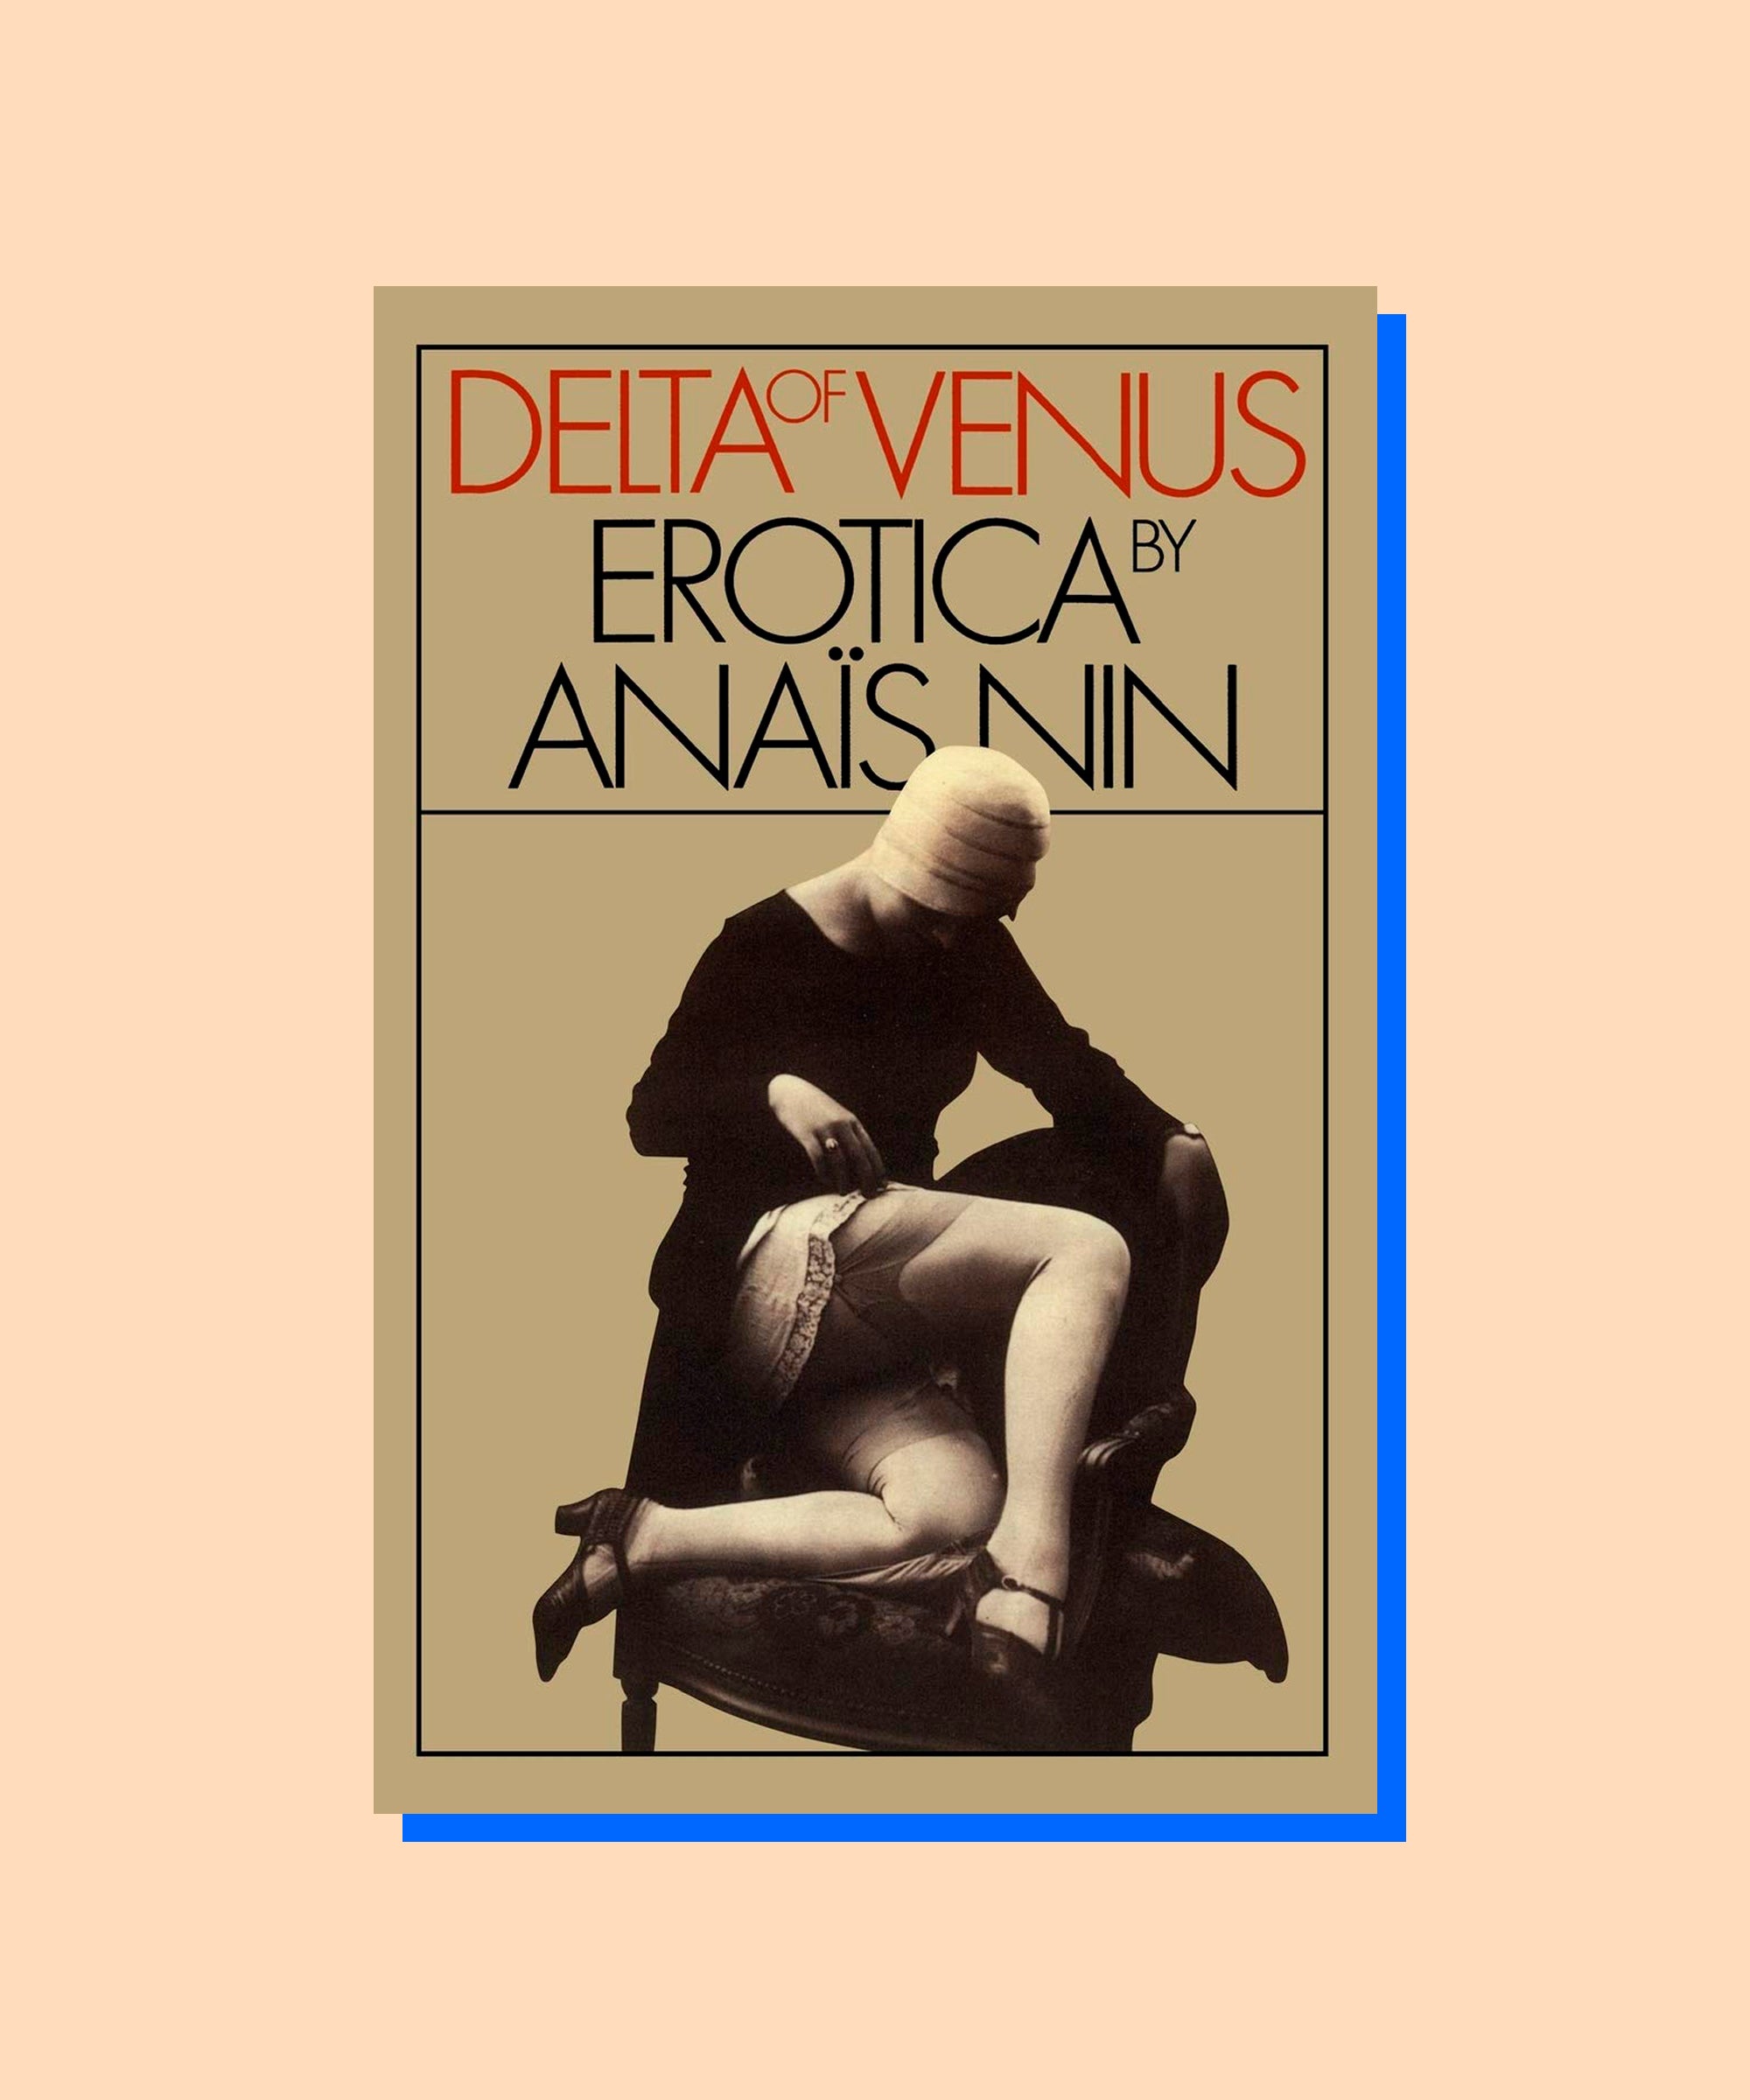 Erotic fiction books